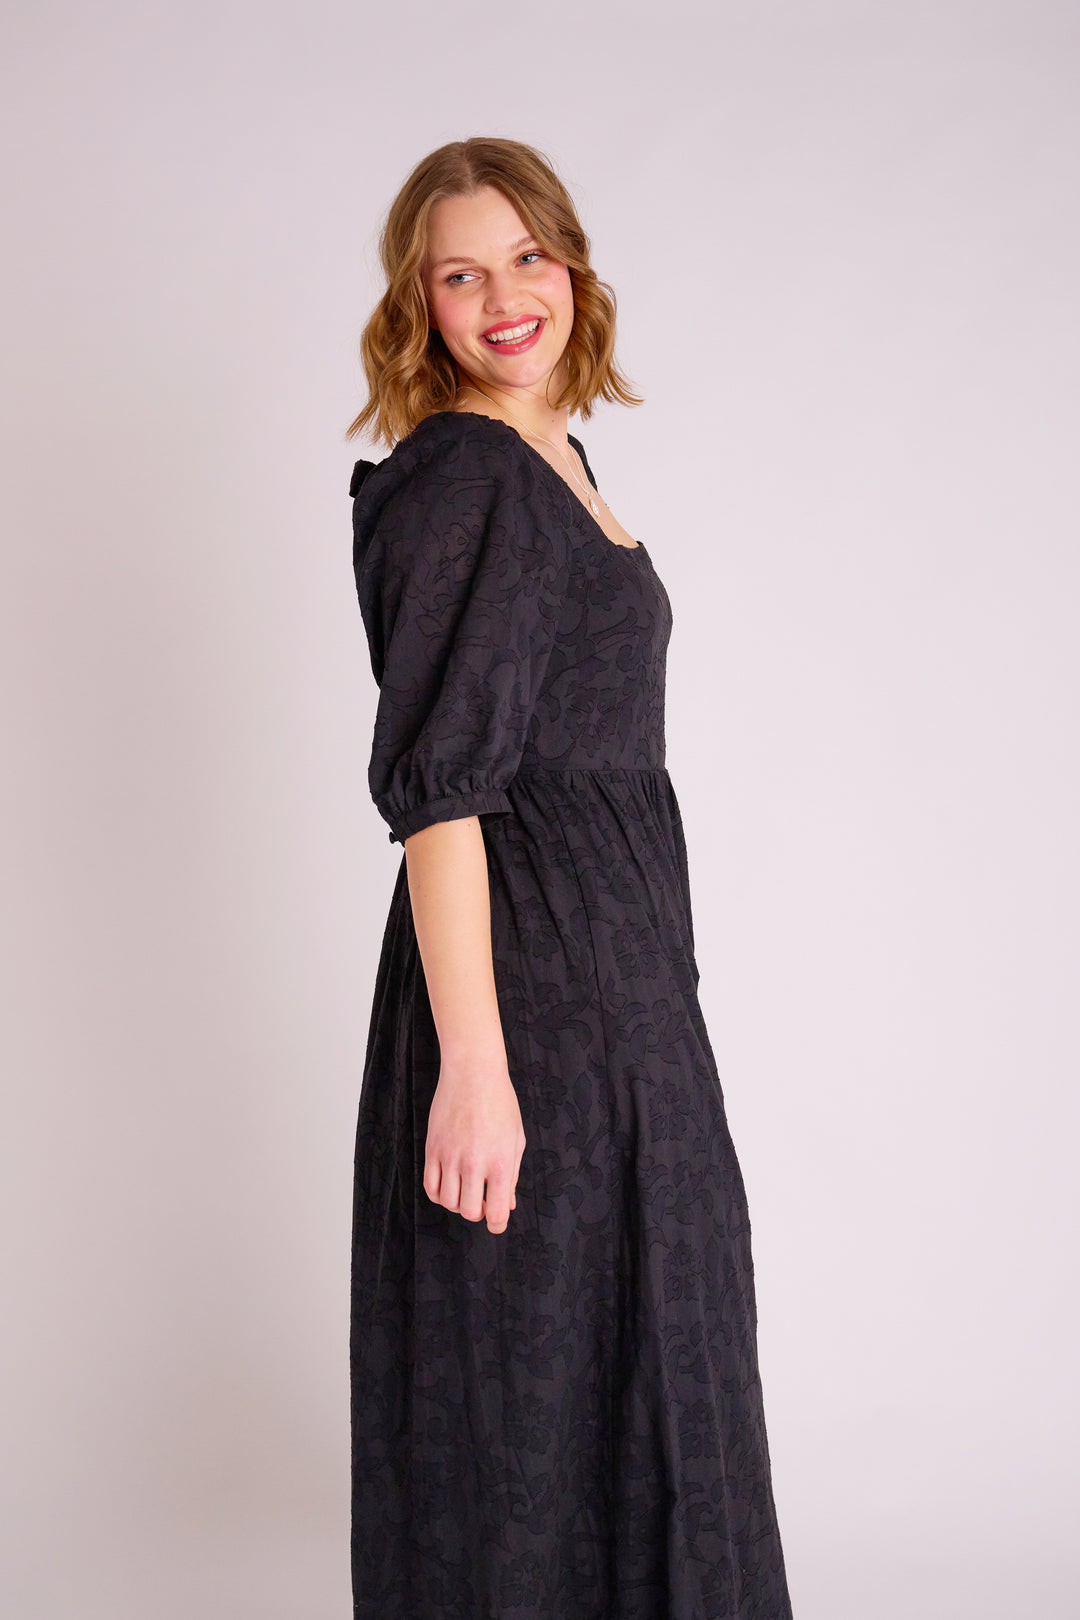 Minna Cotton Black Jacquard Dress